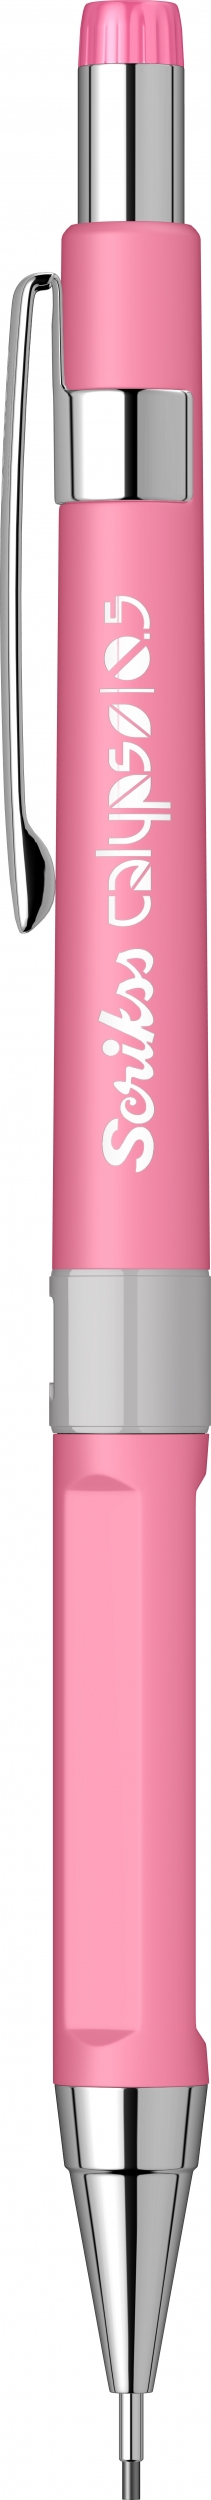 Механичен молив Scrikss Calypso, модел 61319, 0,5мм., цвят Розов